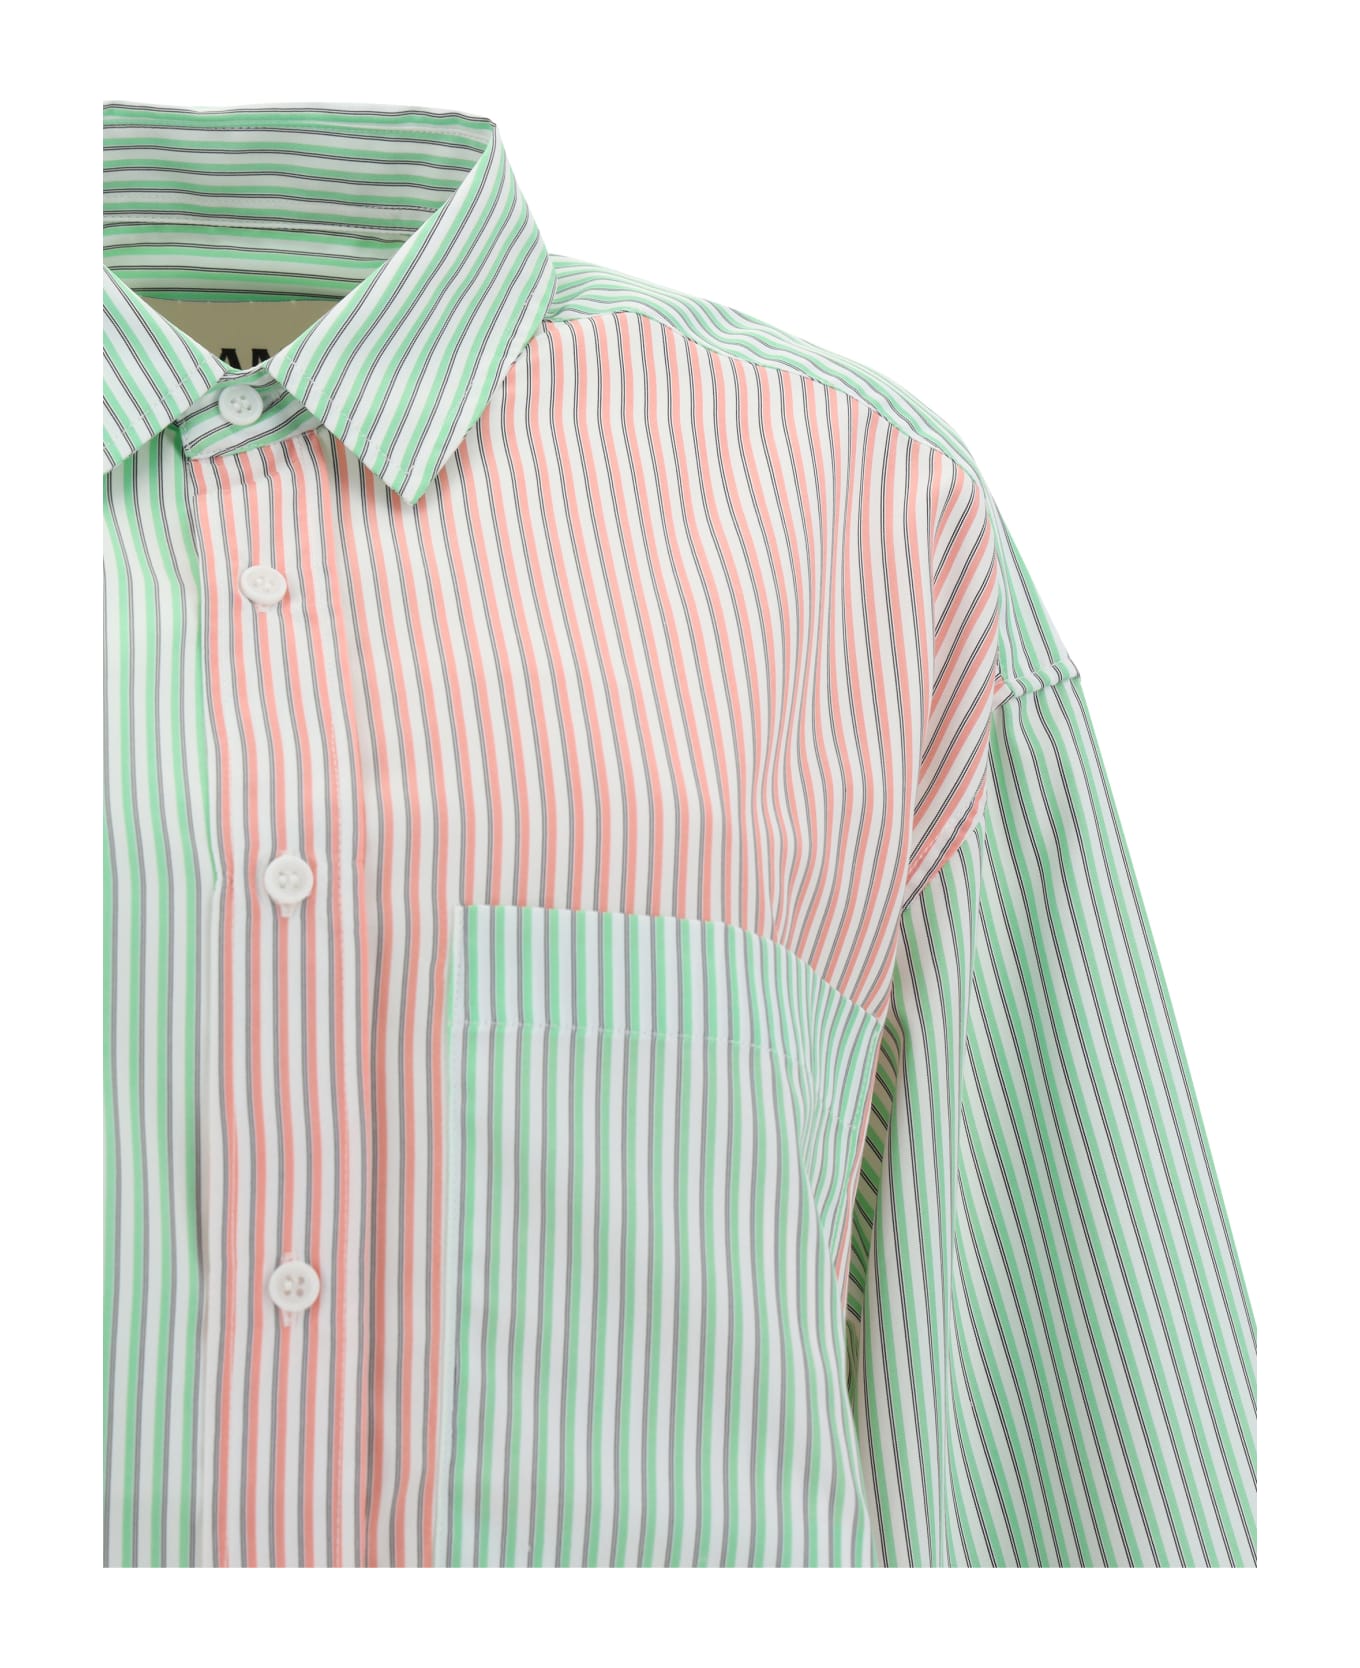 BLANCA Benny Shirt - Lime/pink